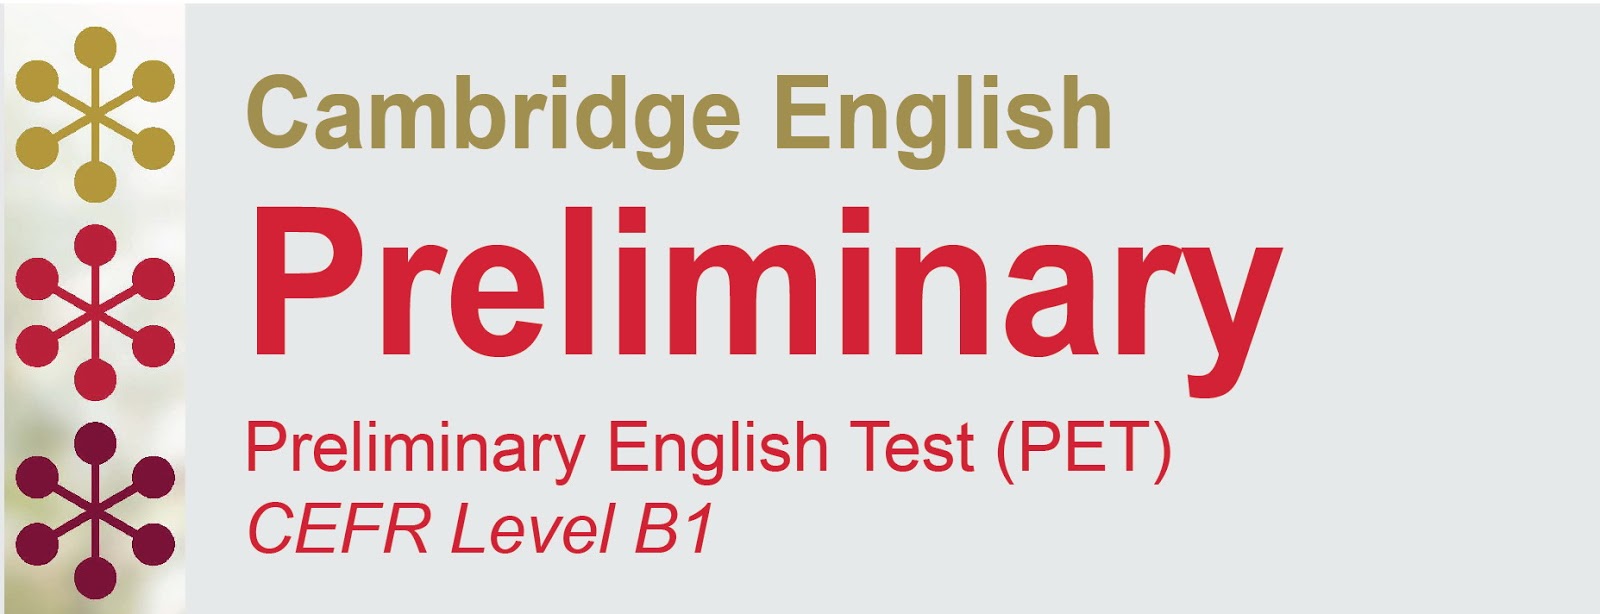 Preliminary english test. Pet Cambridge. Pet preliminary English Test 1. Cambridge English preliminary. Cambridge preliminary Pet b1.